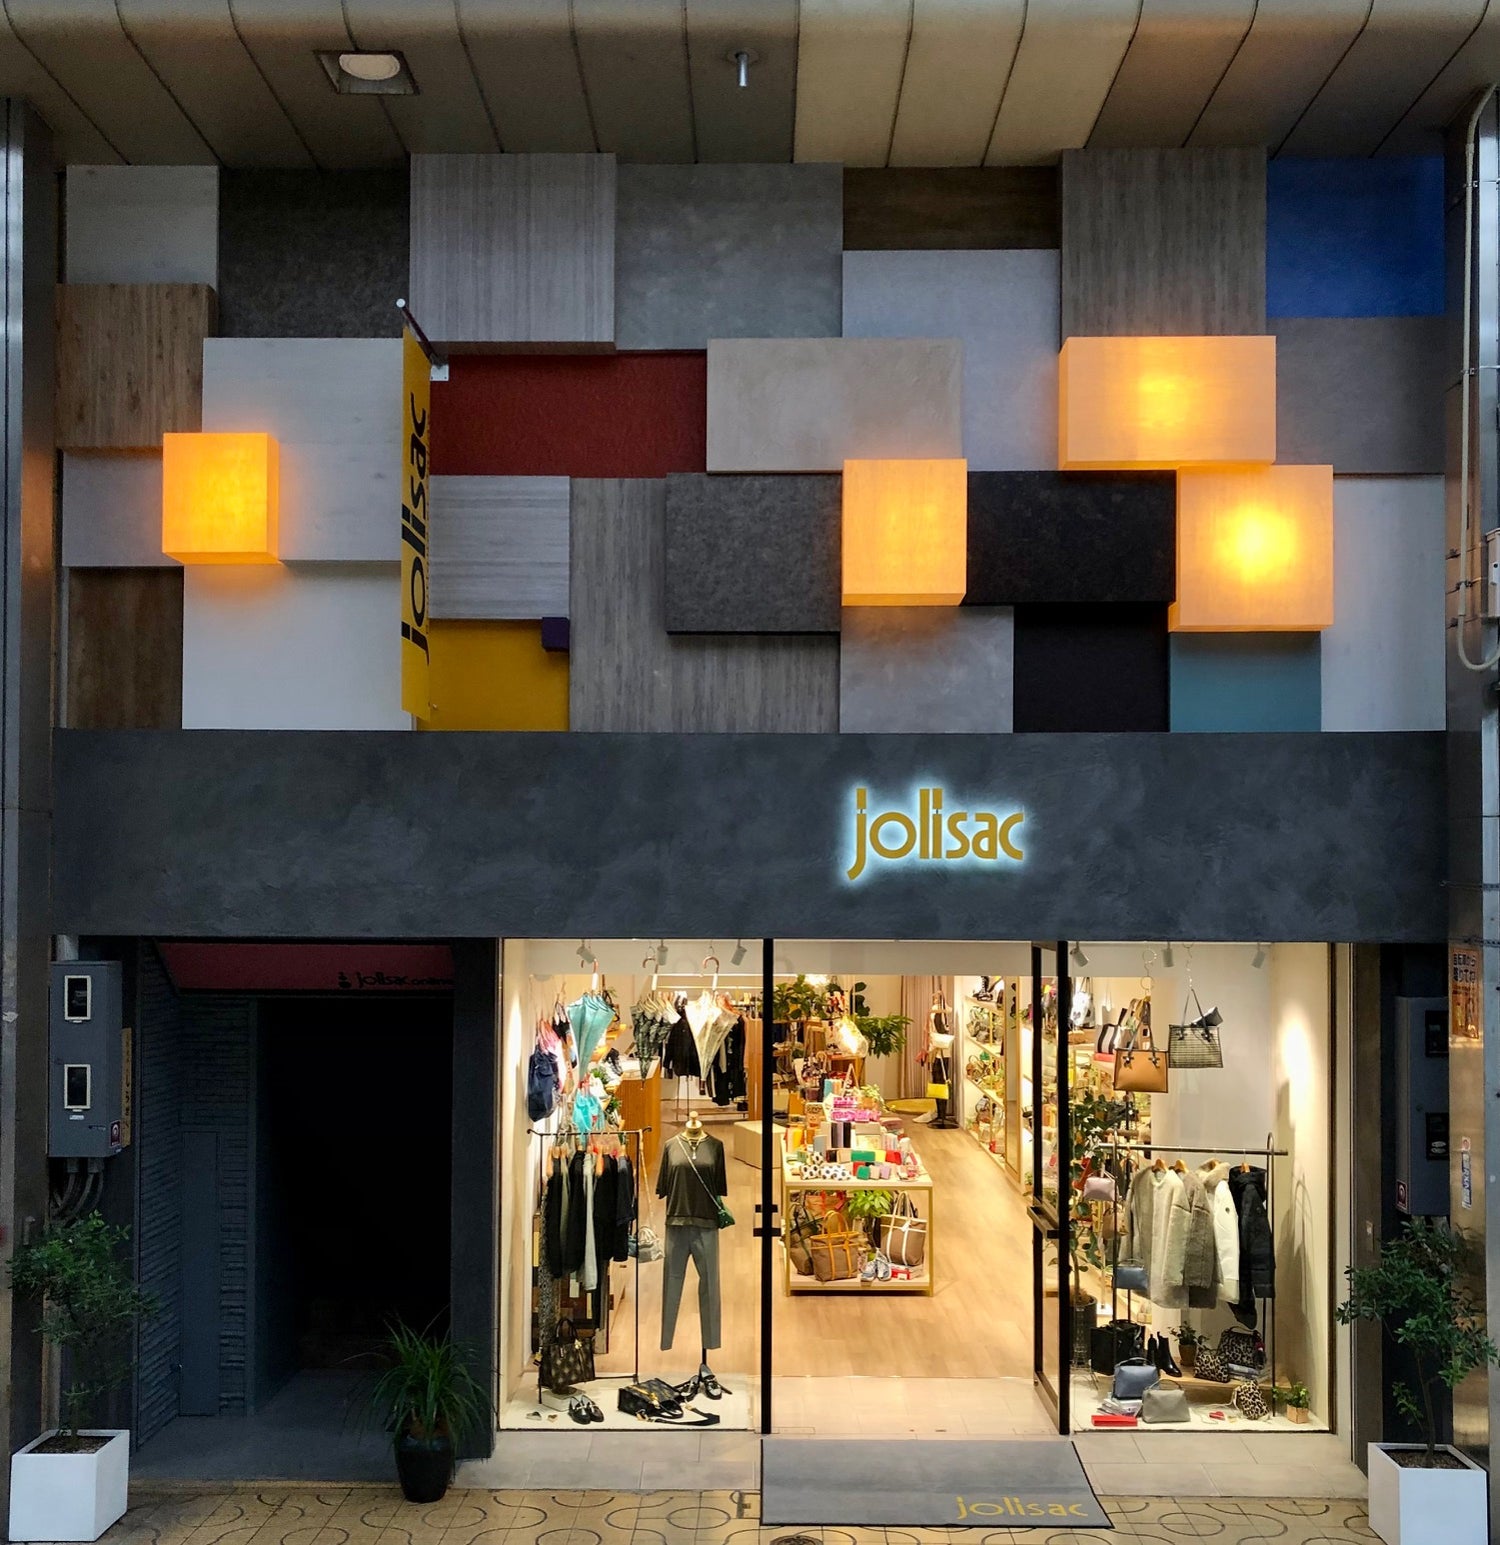 Jolisac retail store, Japan